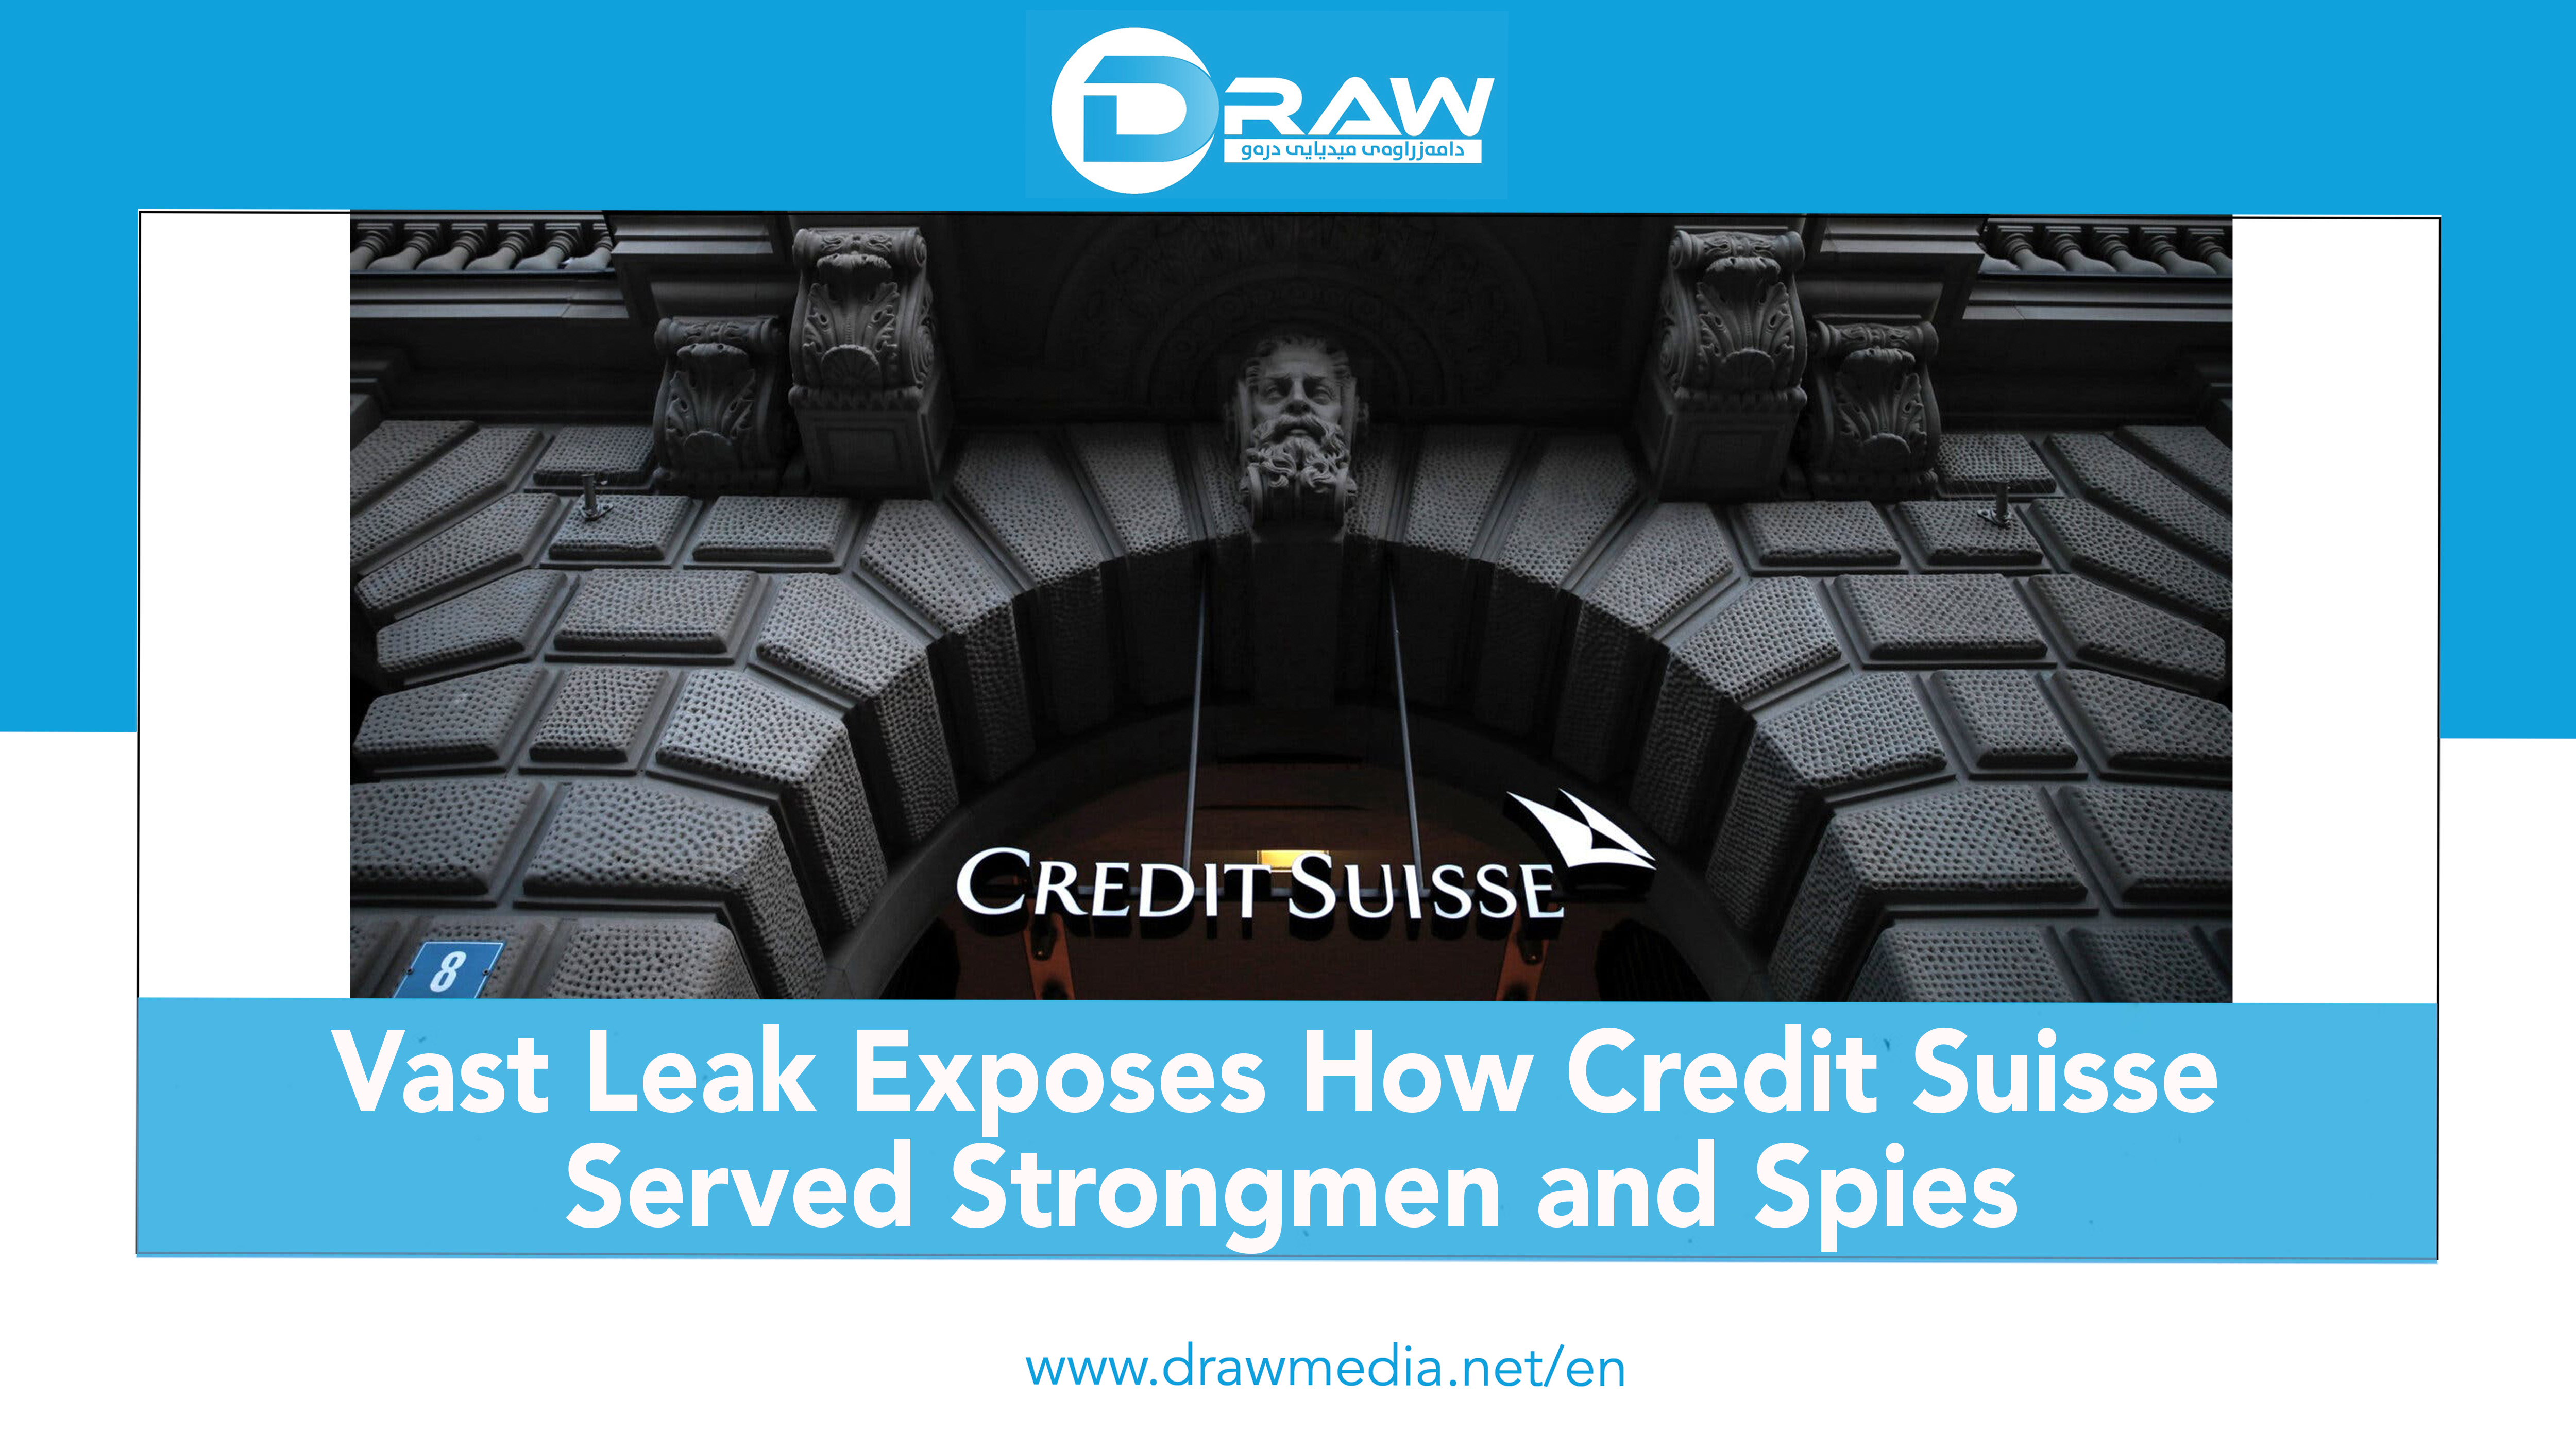 DrawMedia.net / Vast Leak Exposes How Credit Suisse Served Strongmen and Spies